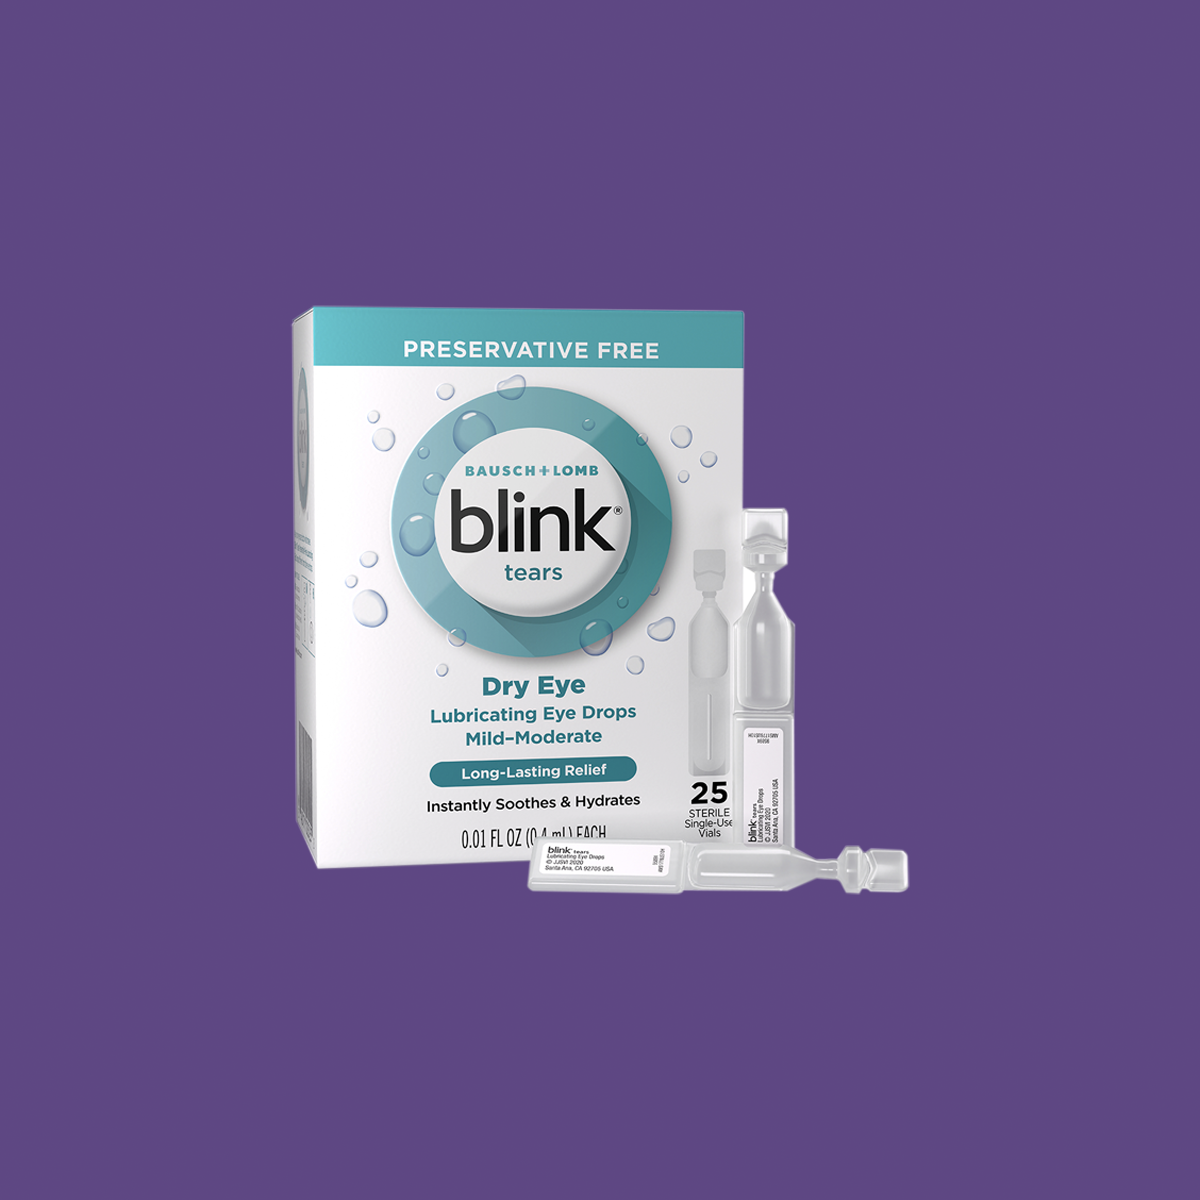 Blink Tears Preservative Free Lubricating Eye Drops (25 Count)